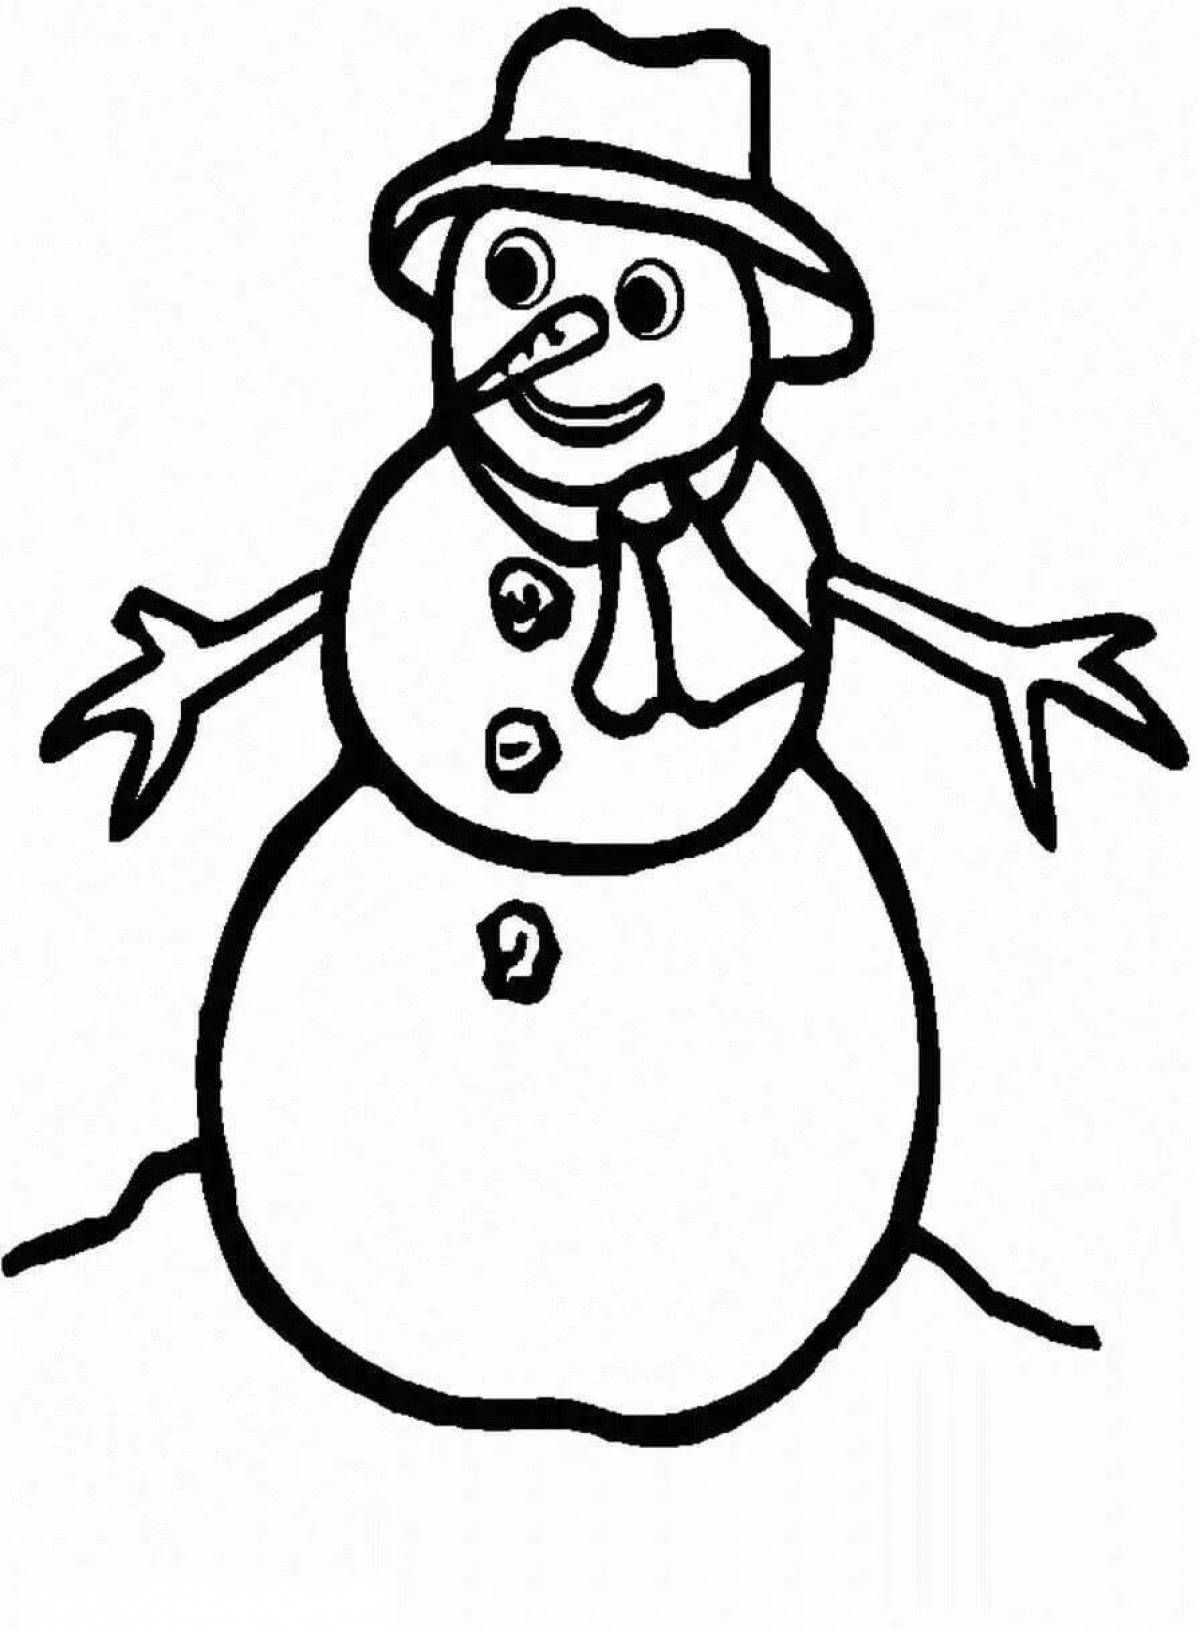 Fun snowman for kids #4